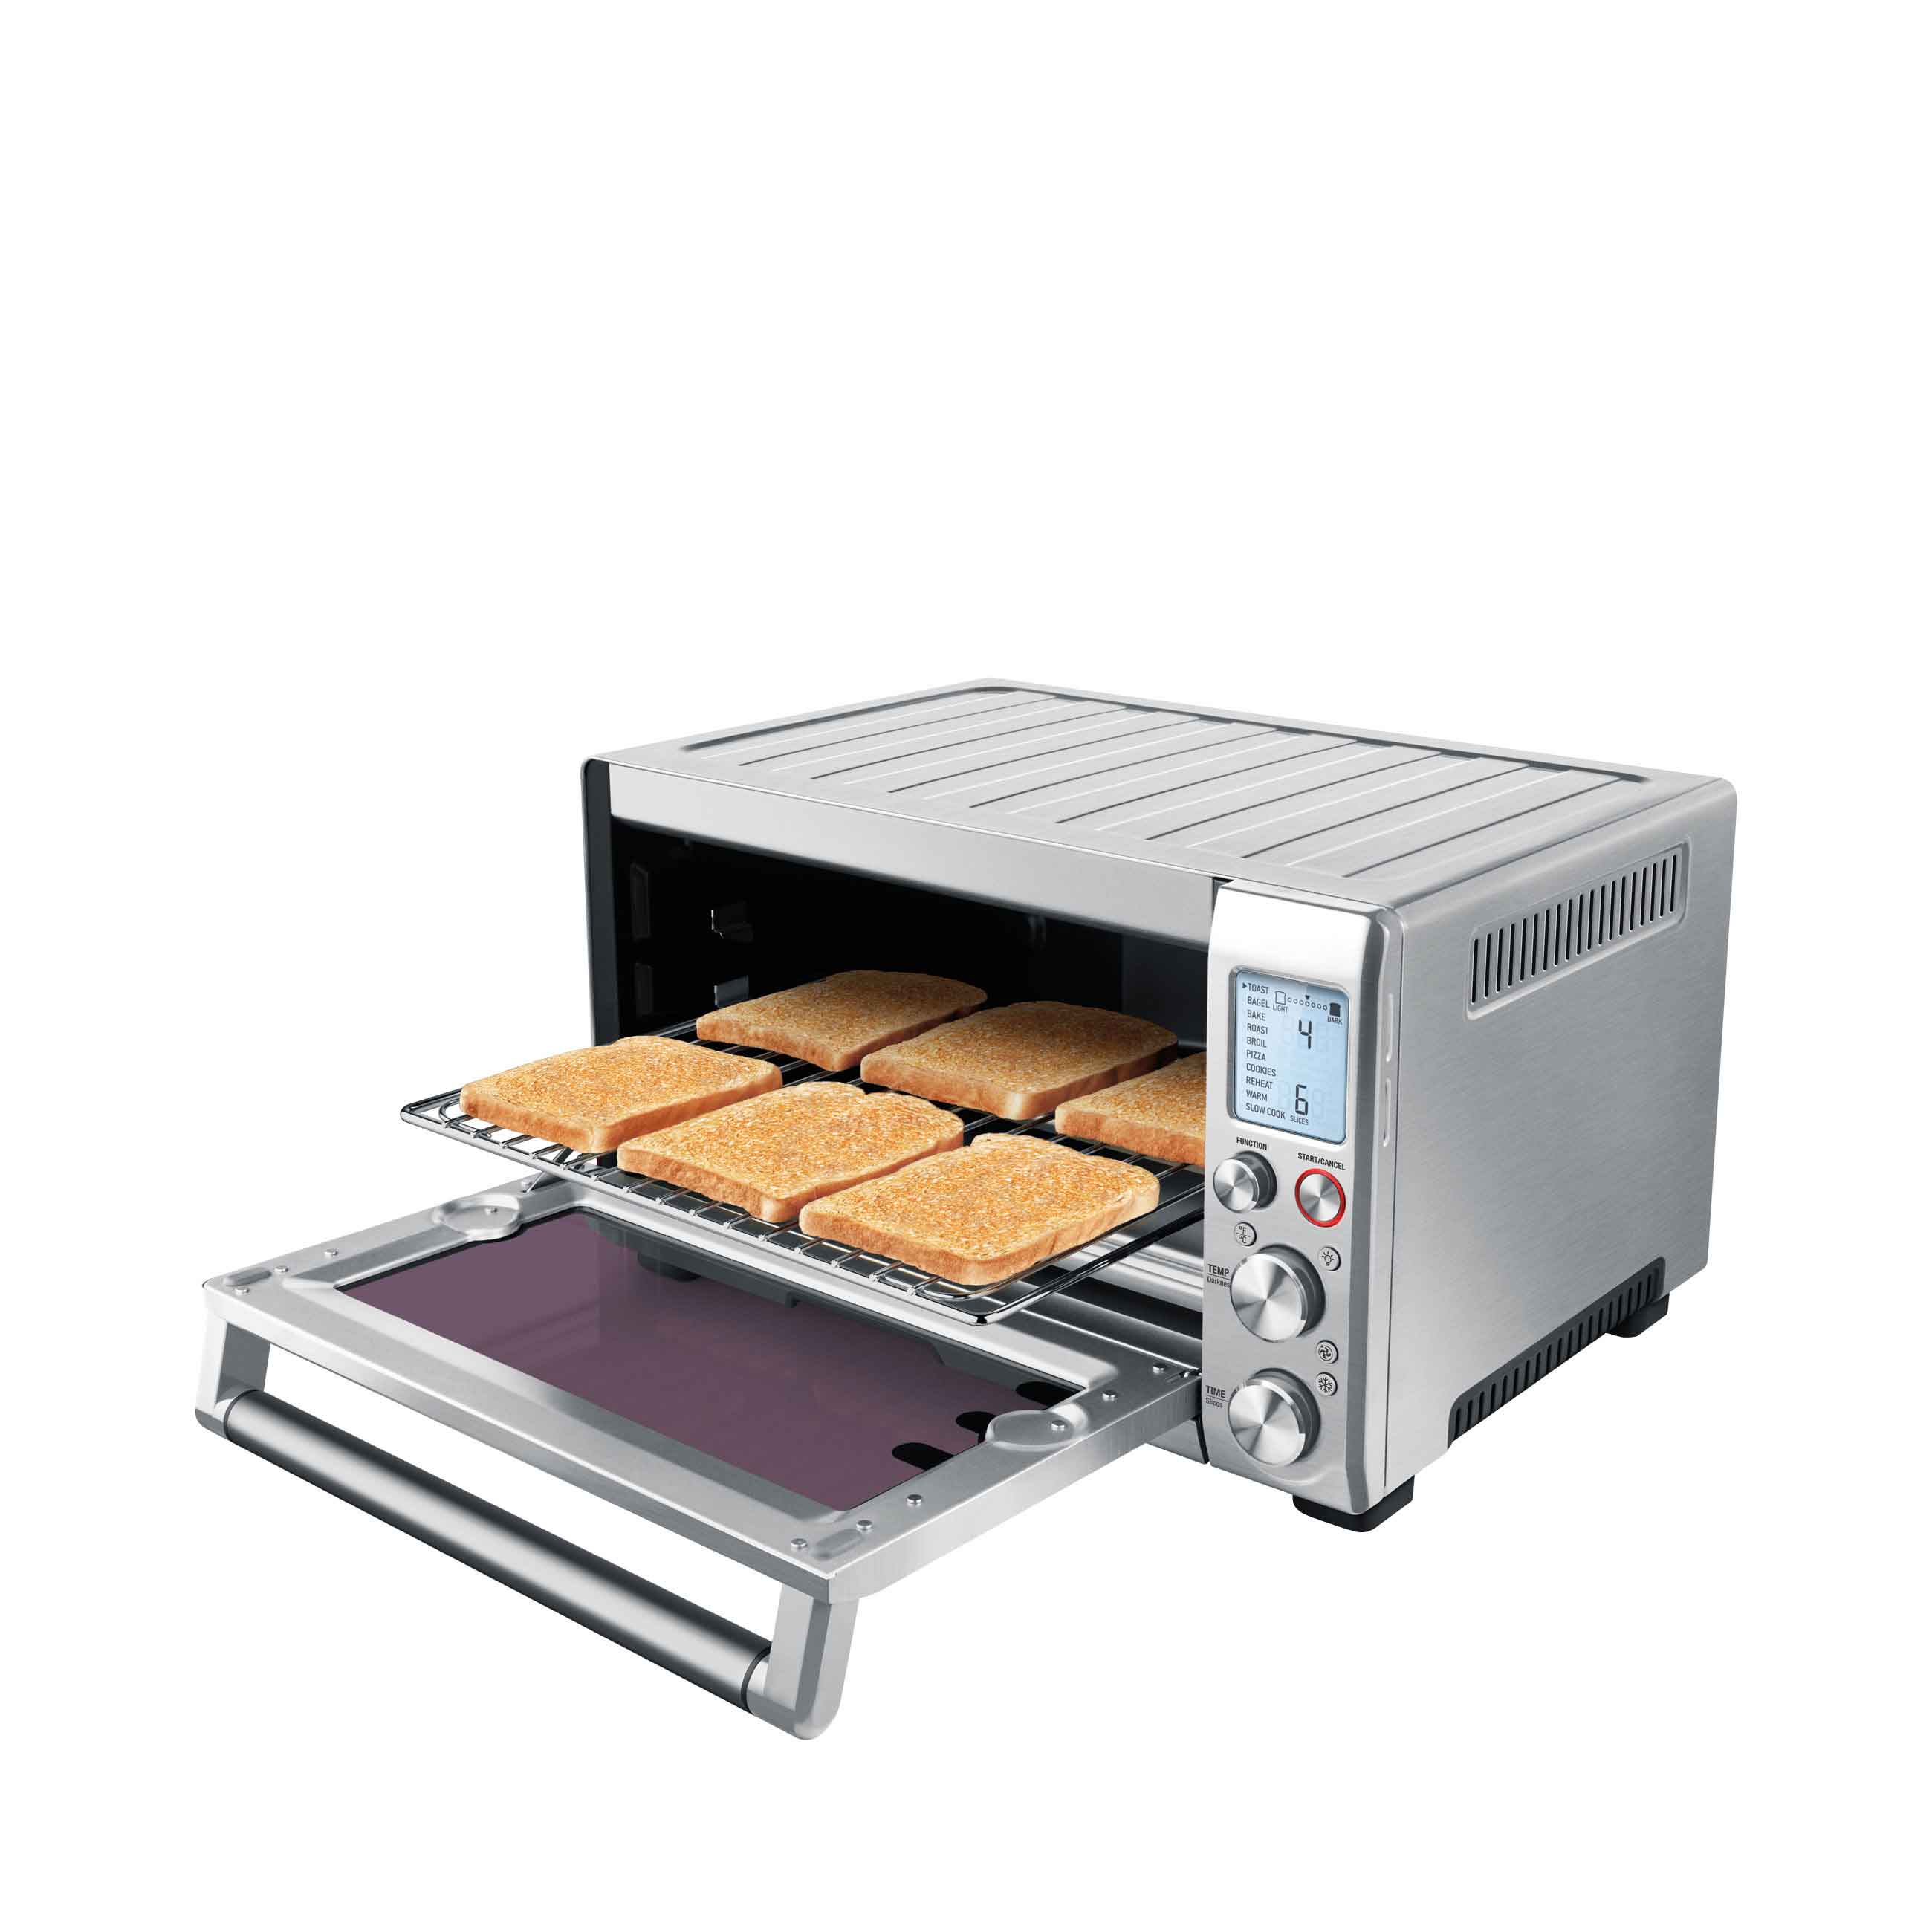 https://www.breville.com/content/dam/breville/ca/assets/ovens/finished-goods/bov845-the-smart-oven-pro/bov845bssusc-the-smart-oven-pro/images/BOV845BSSUSC-the-smart-oven-pro-cooking-ovens-carousel3.jpg